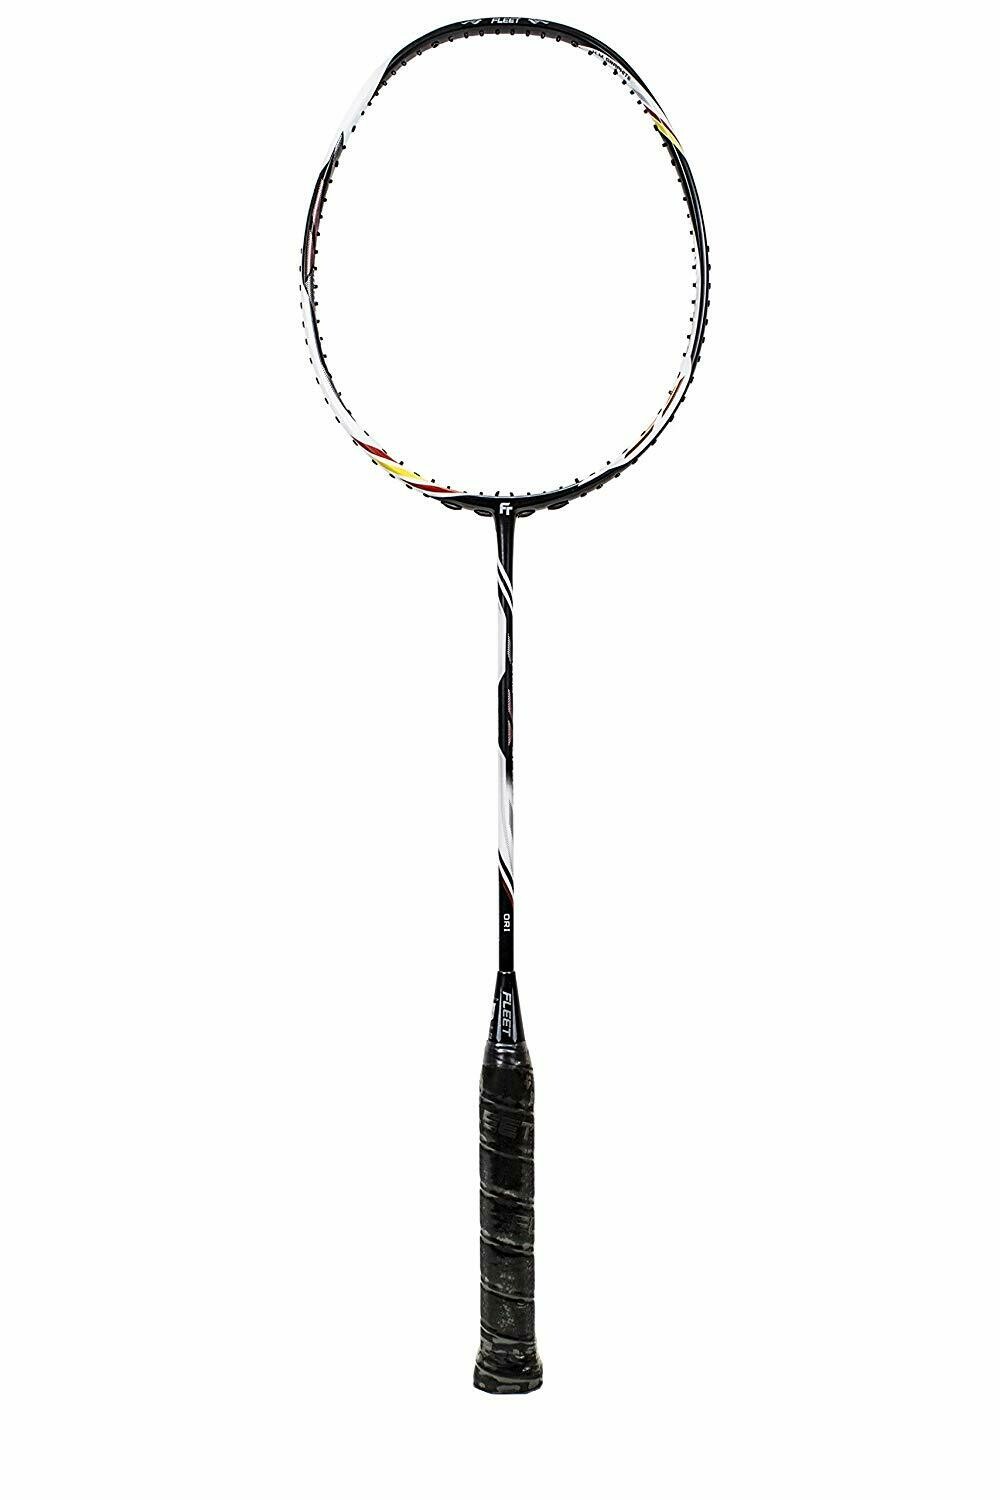 Fleet Duo Speed Badminton Racket (White and Black)